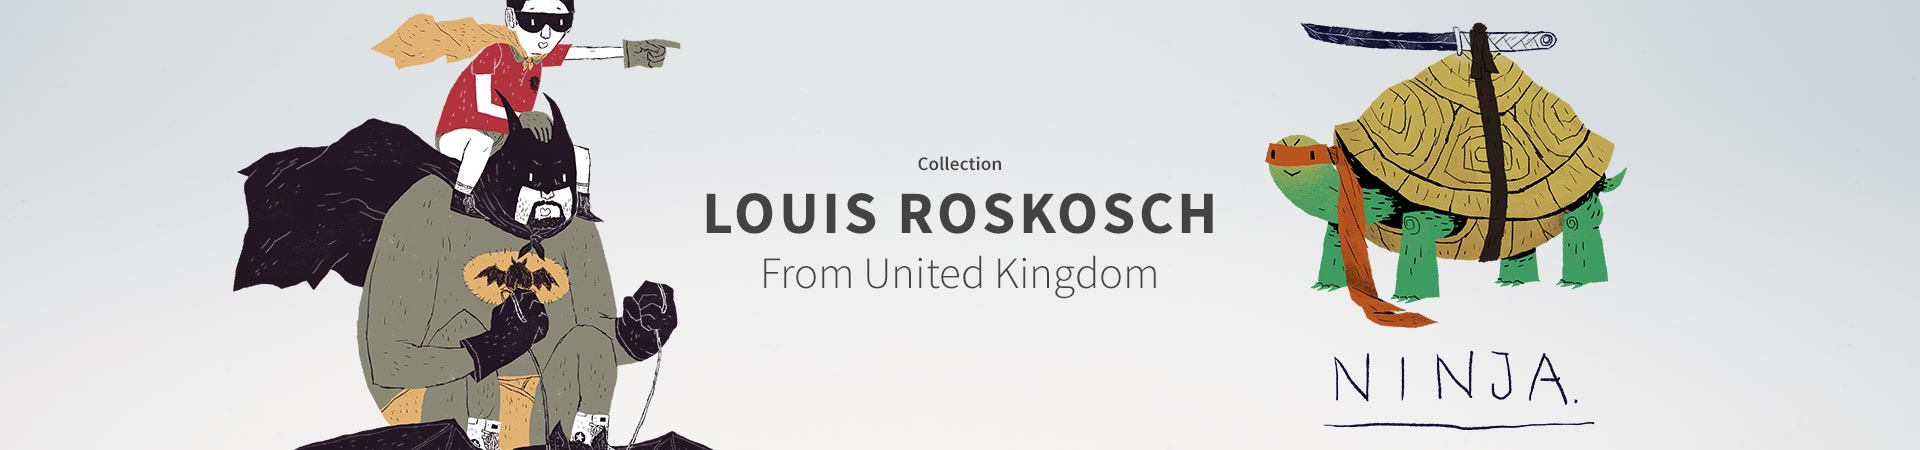 Collection Louis Roskosch